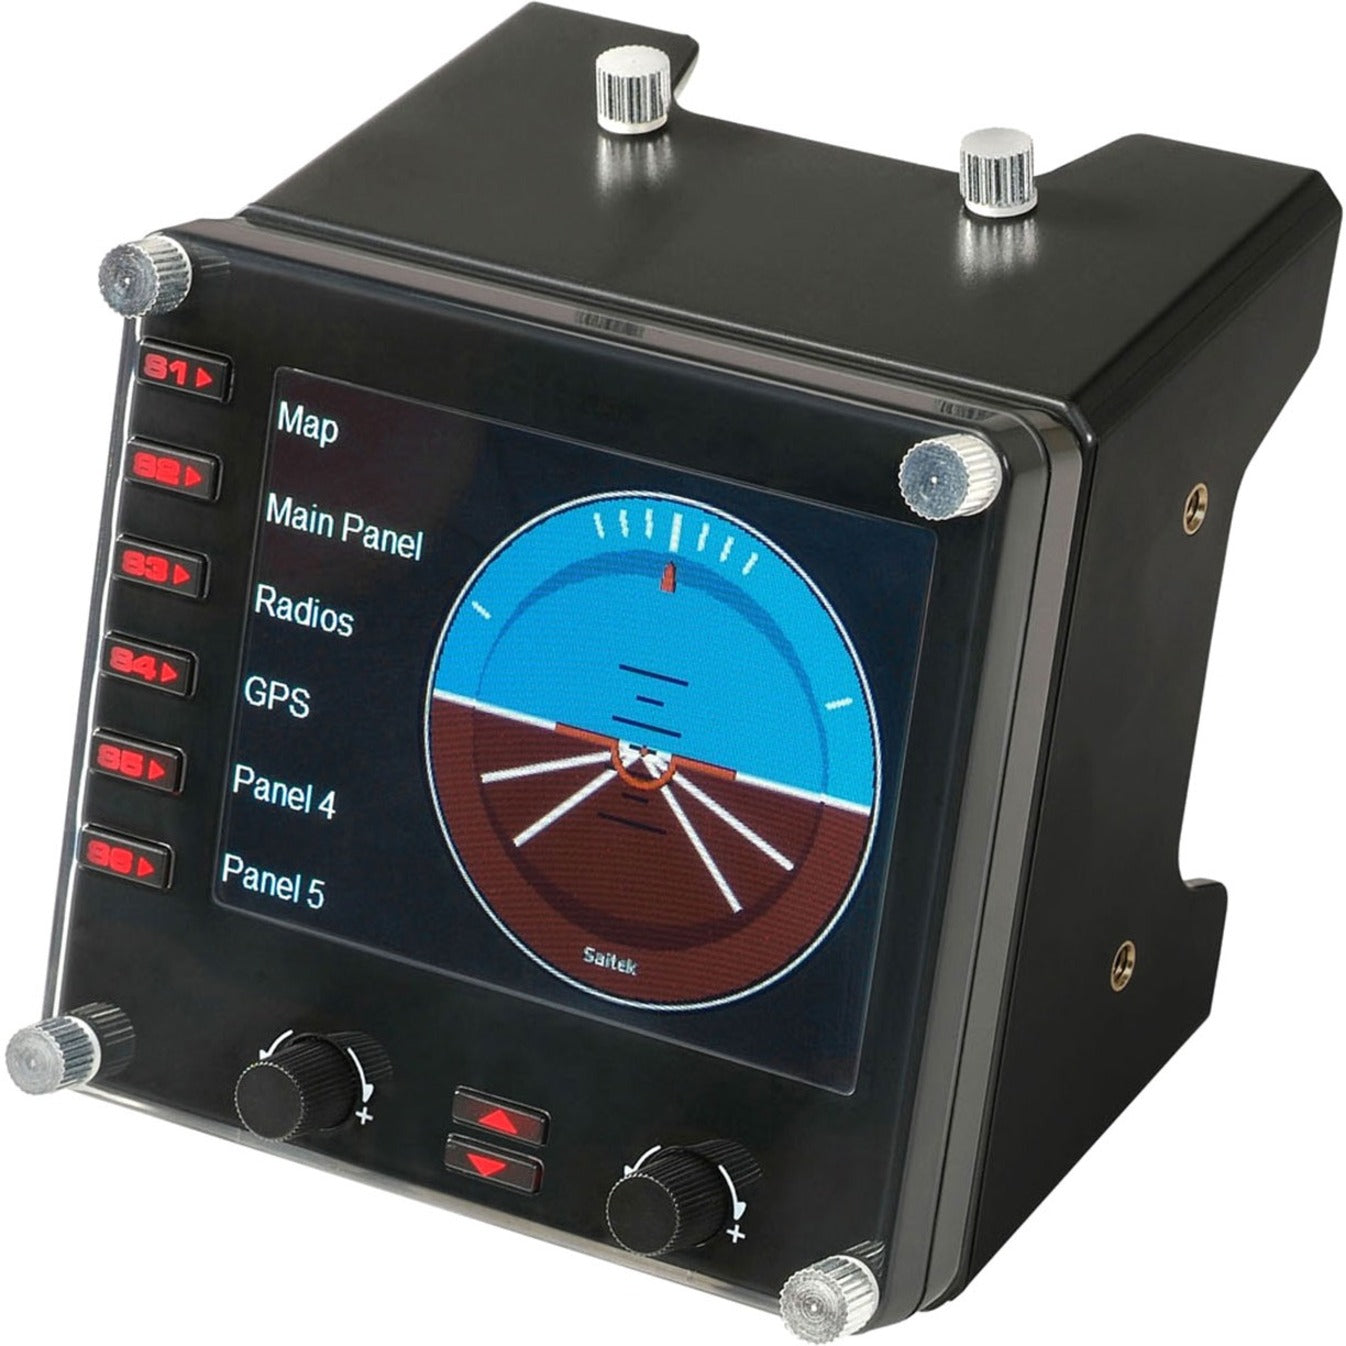 Saitek 945-000027 Pro Flight Instrument Panel, USB Gaming Control Panel